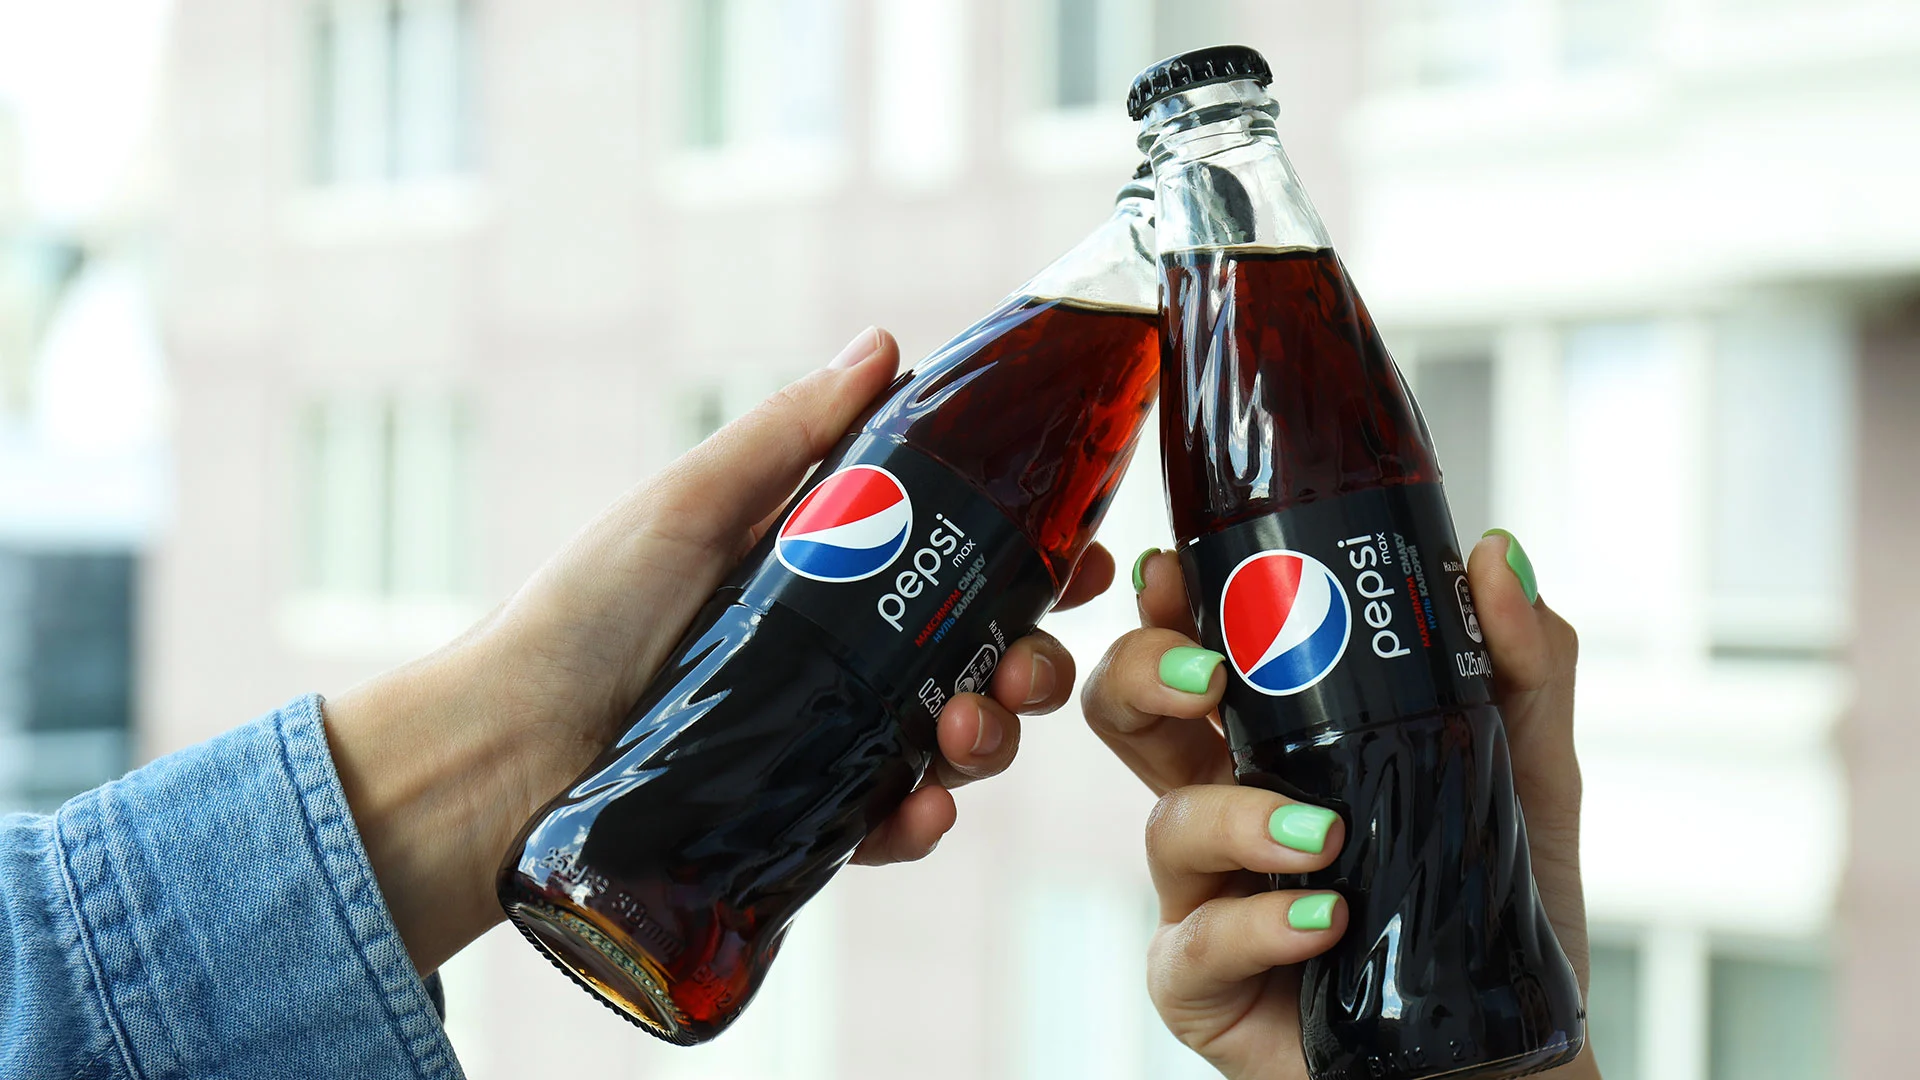 Dividenden&#8209;Star PepsiCo springt mächtig an &#8209; Deswegen sollten Anleger die Aktie jetzt kaufen (Foto: AtlasStudio/Shutterstock)